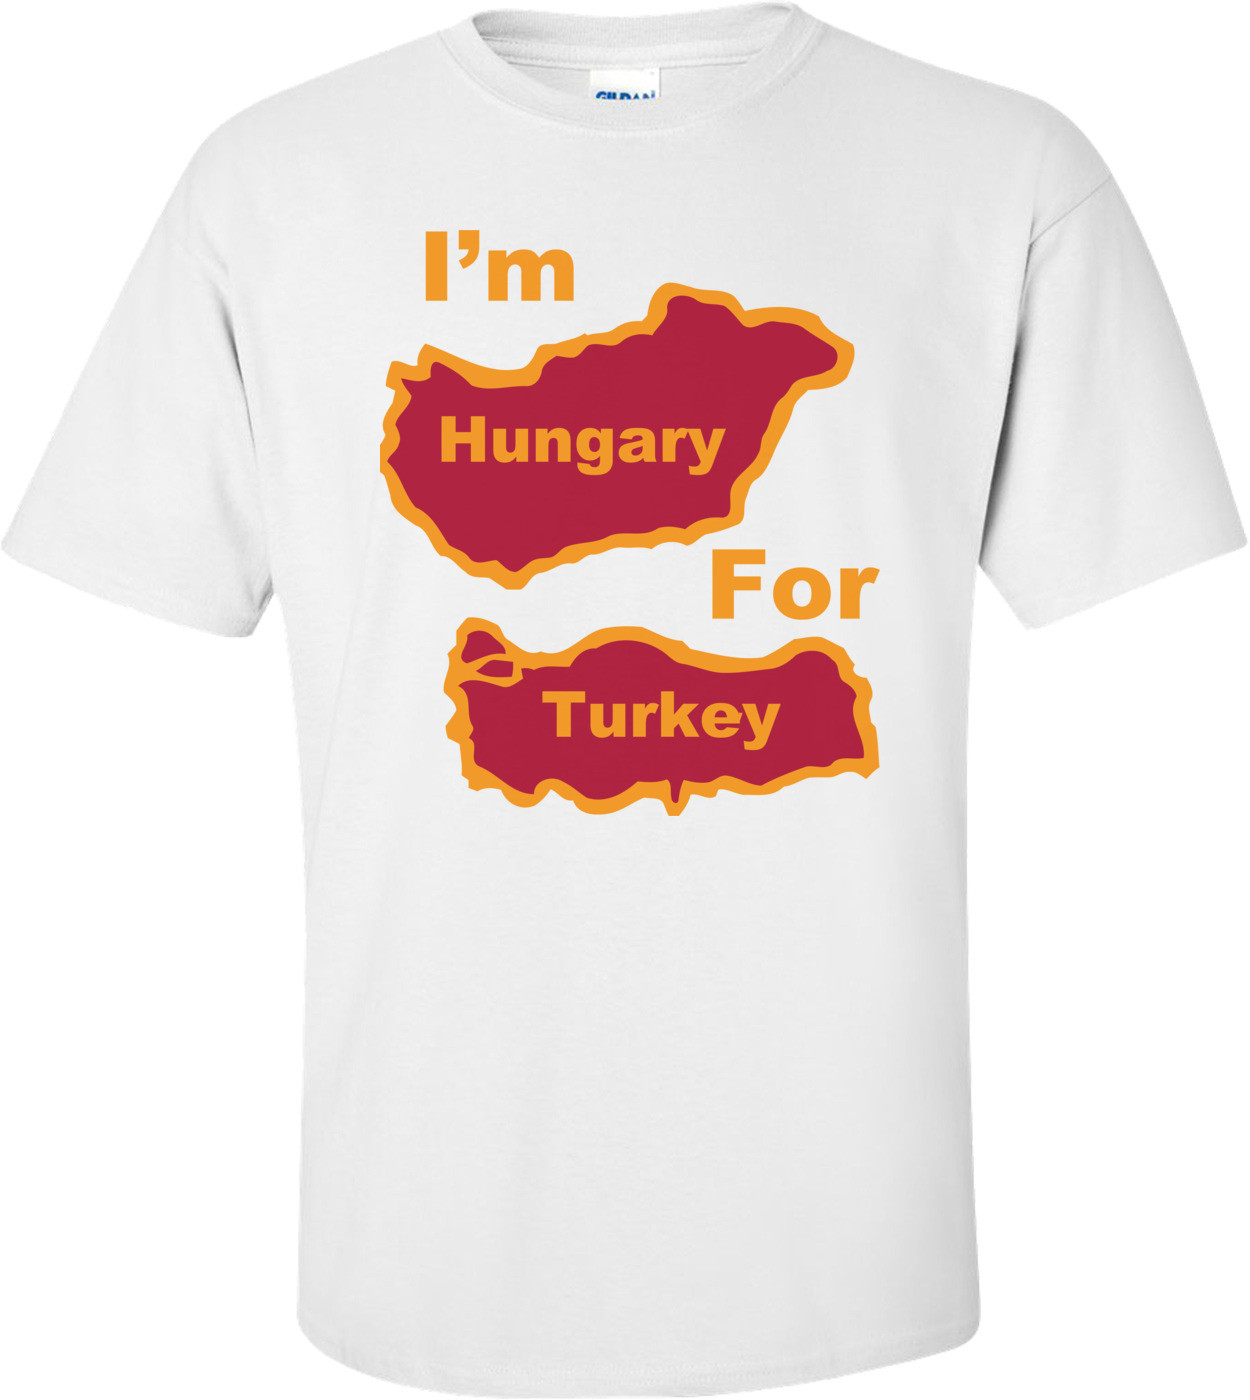 I'm Hungary For Turkey